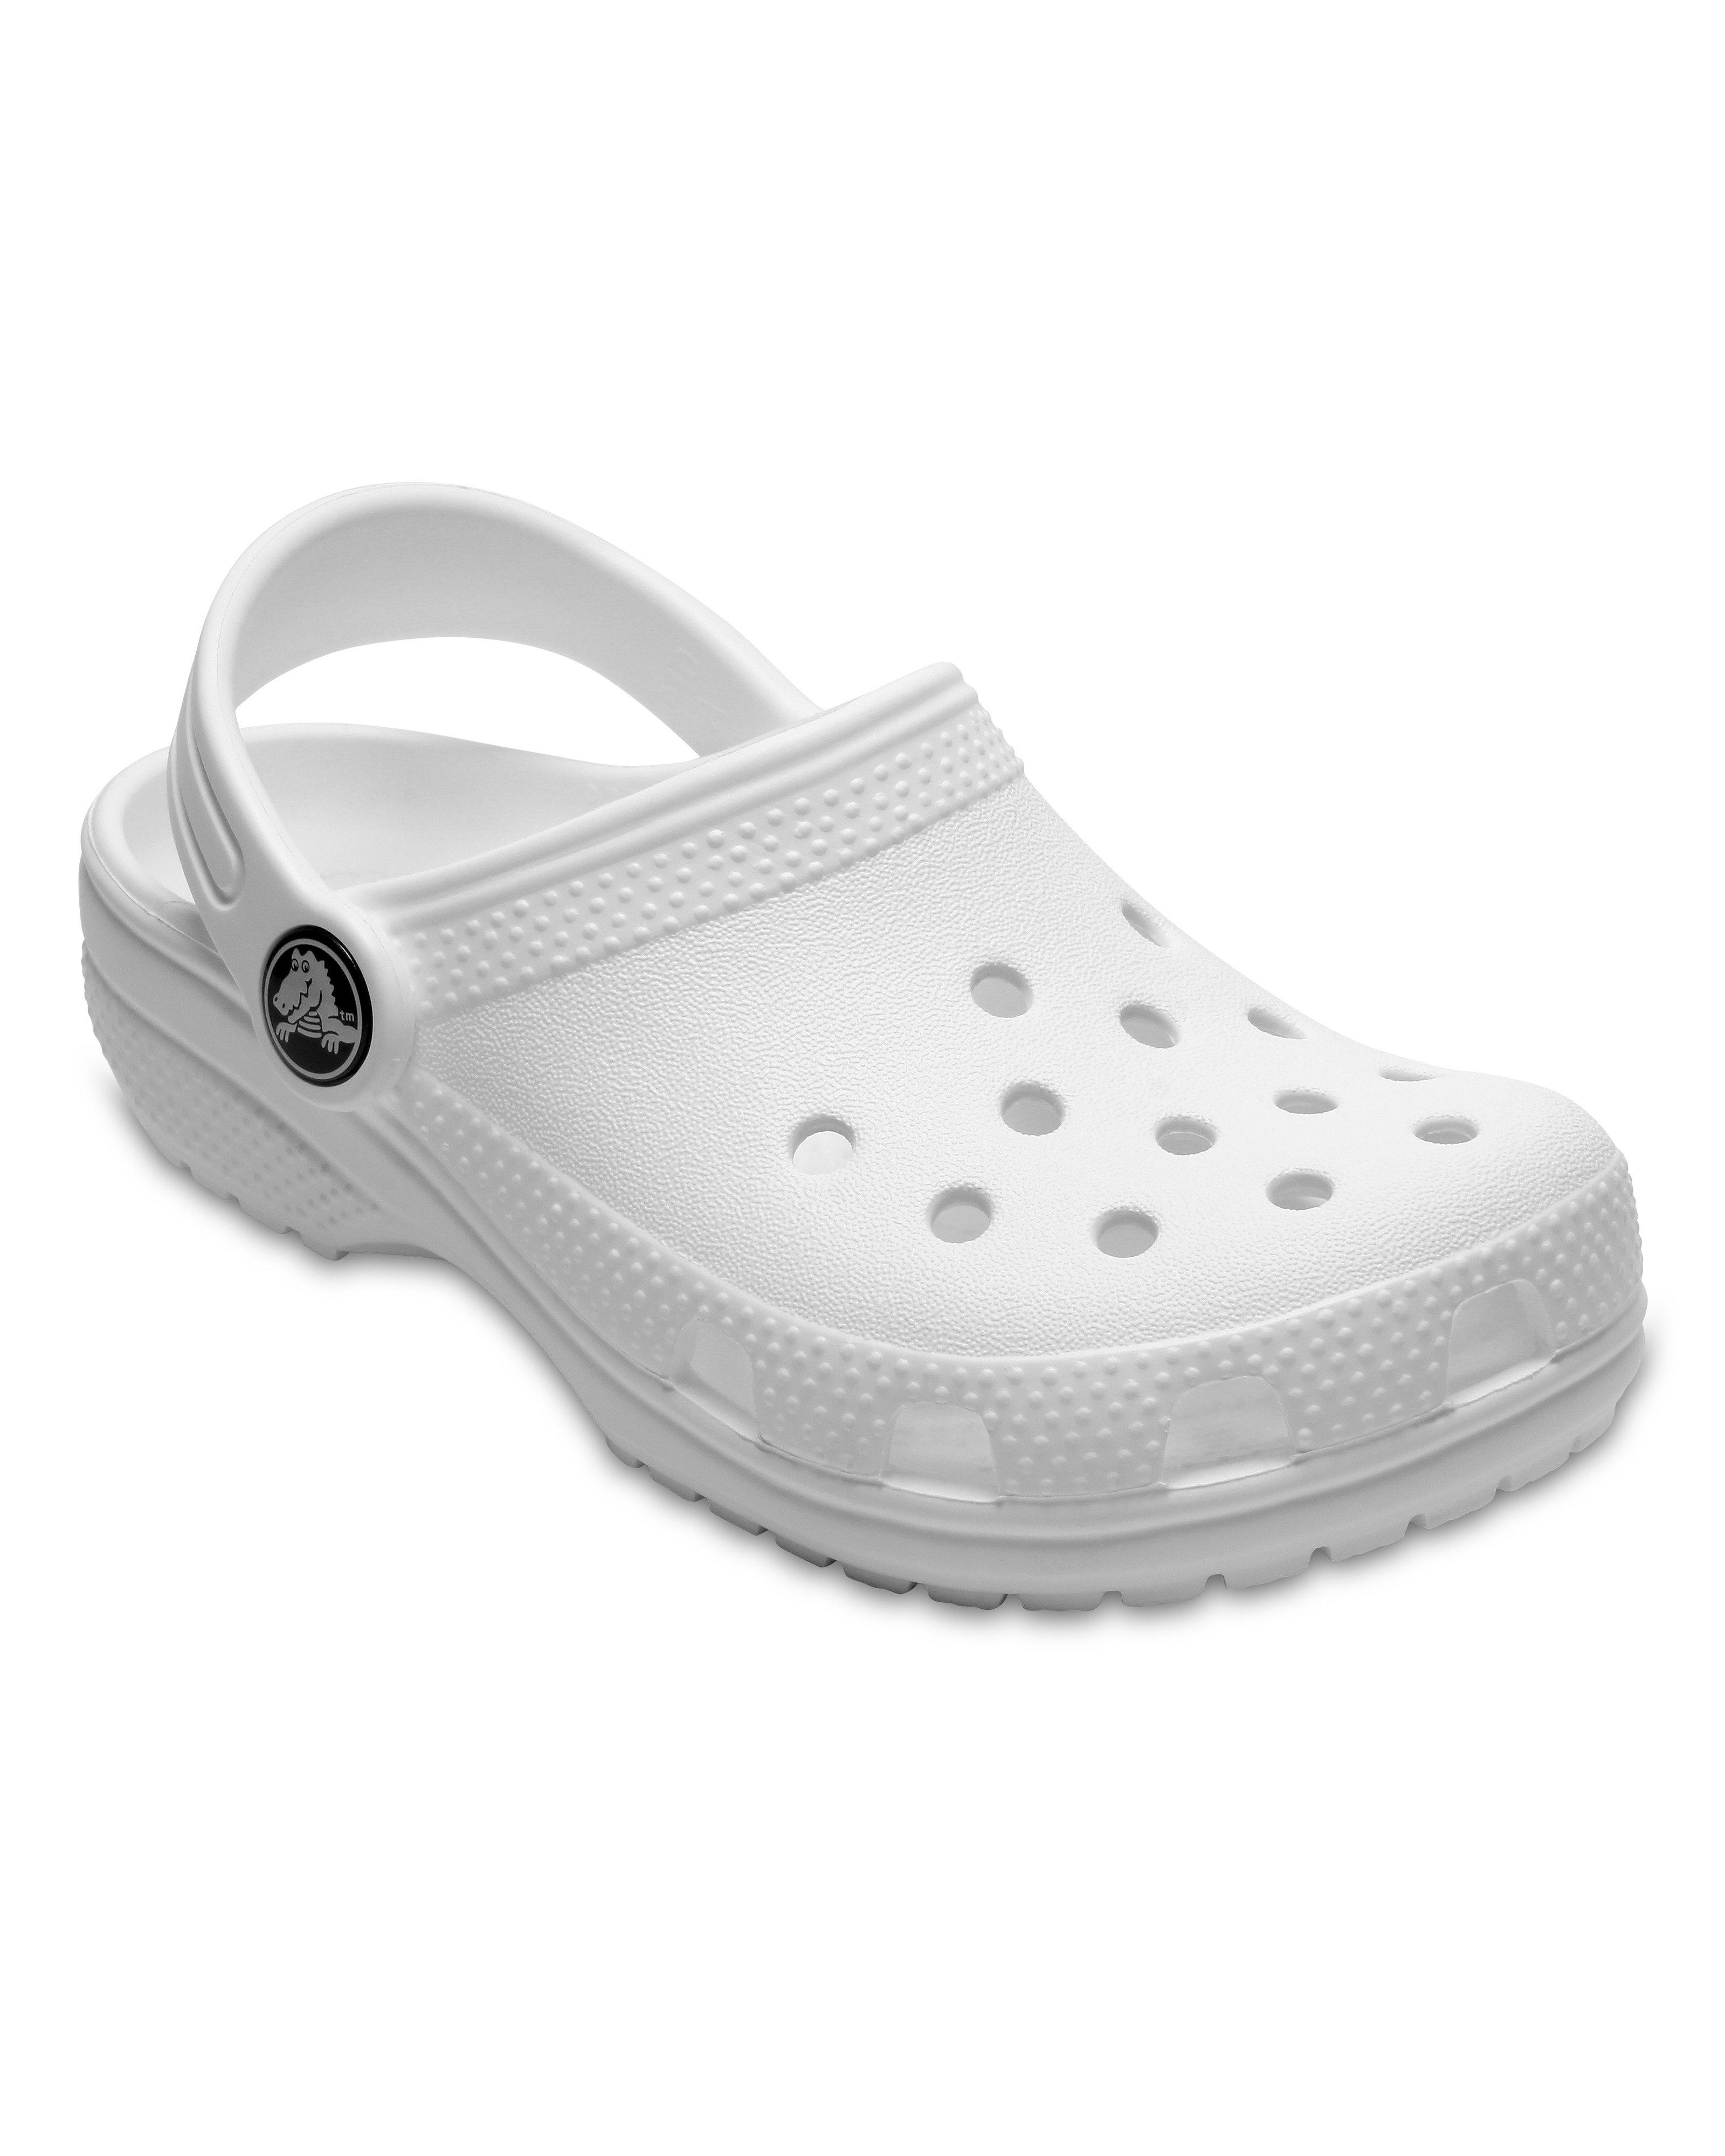 Crocs Kids Classic Clogs -  White